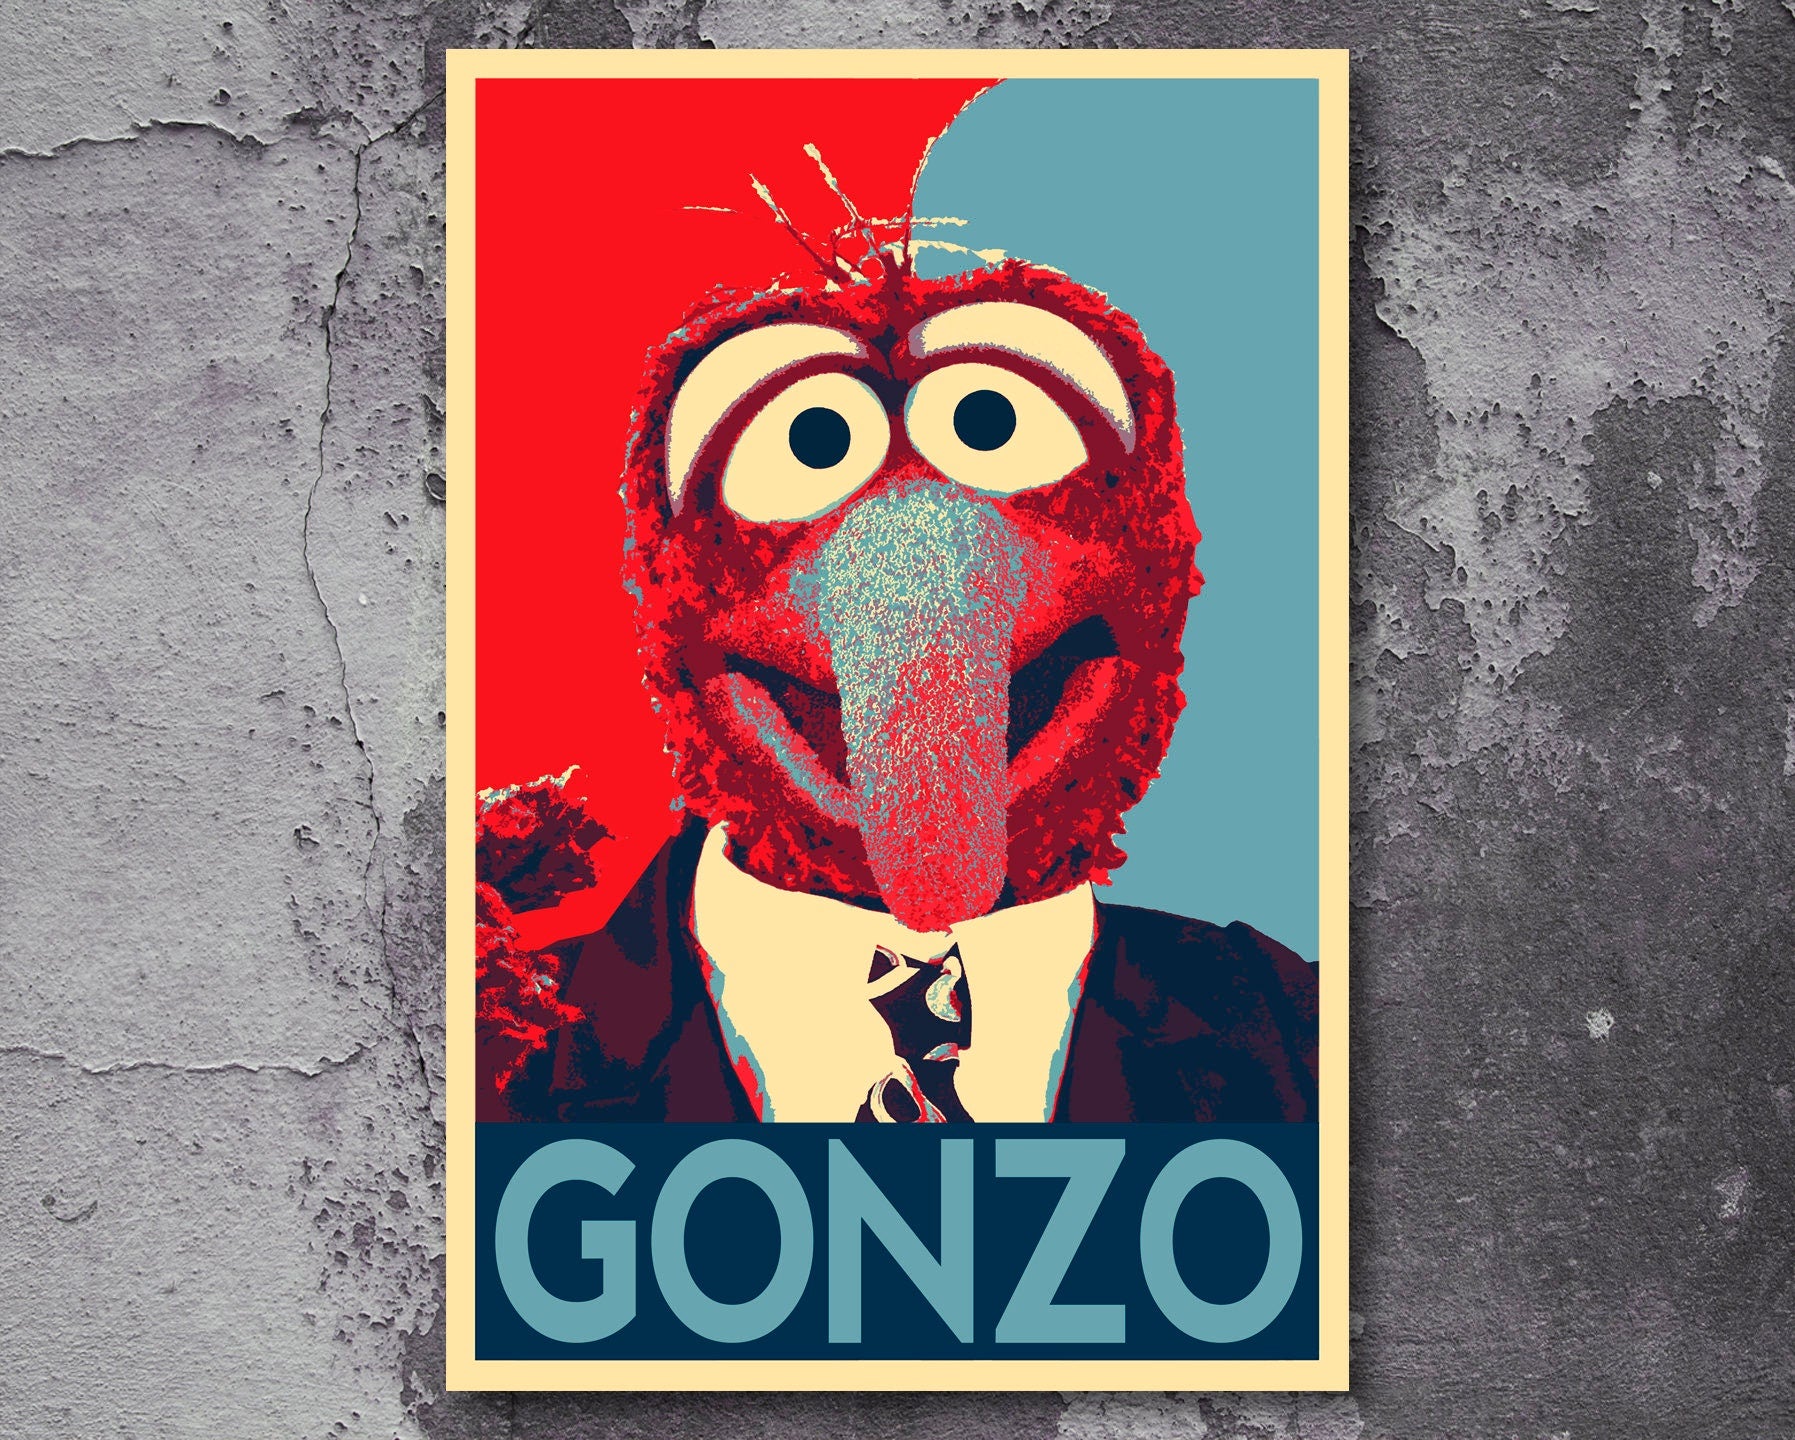 The Gonzo has art.